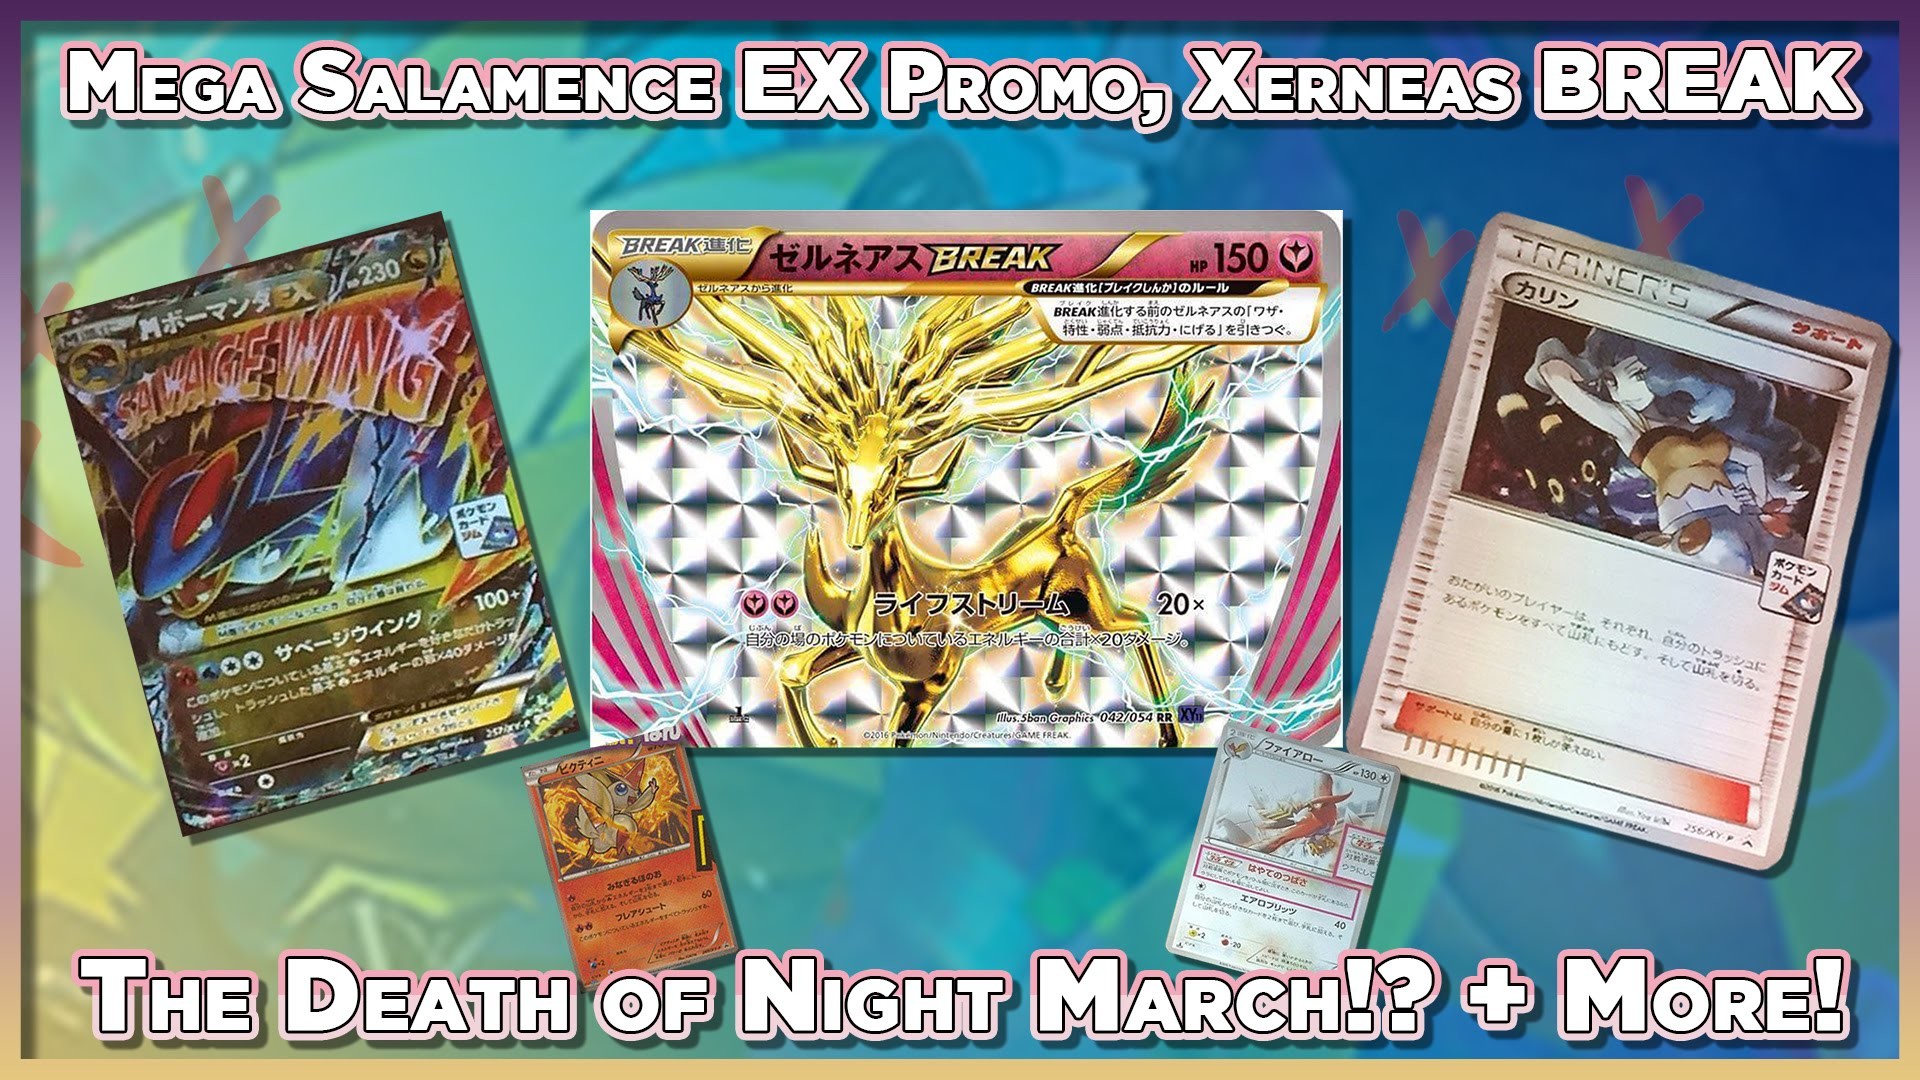 1920x1080 Pokemon News | Mega Salamence EX Promo, XY11 Xerneas BREAK, The Death of  Night March!? + More! - YouTube